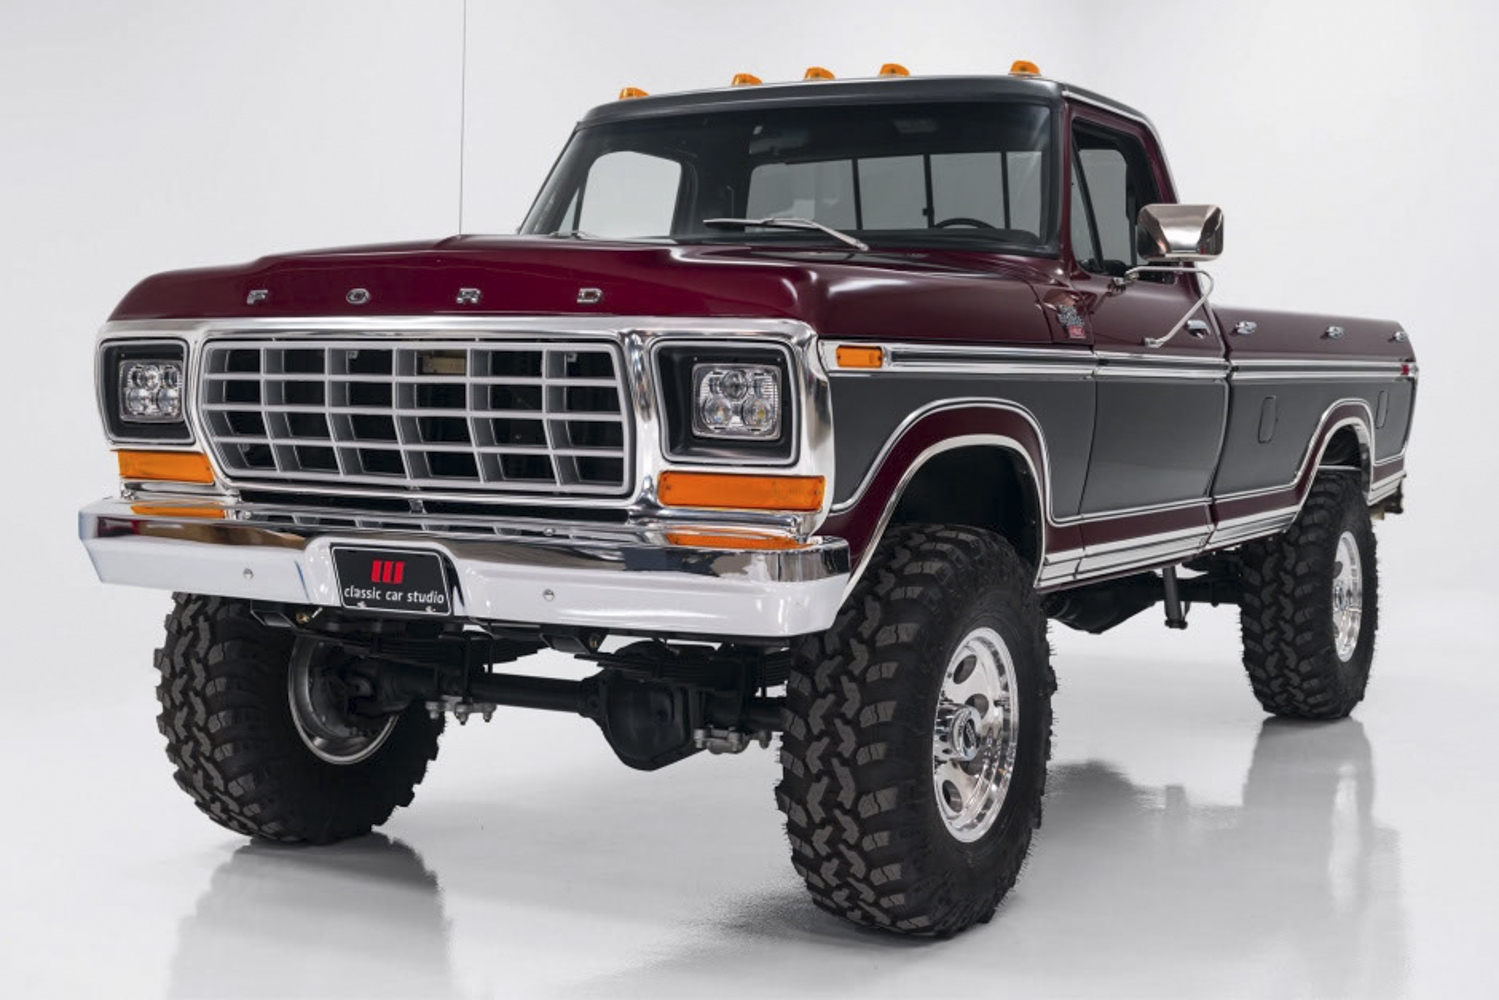 The Next Bloomberg Hot Vintage Pickup Trucks Market: 